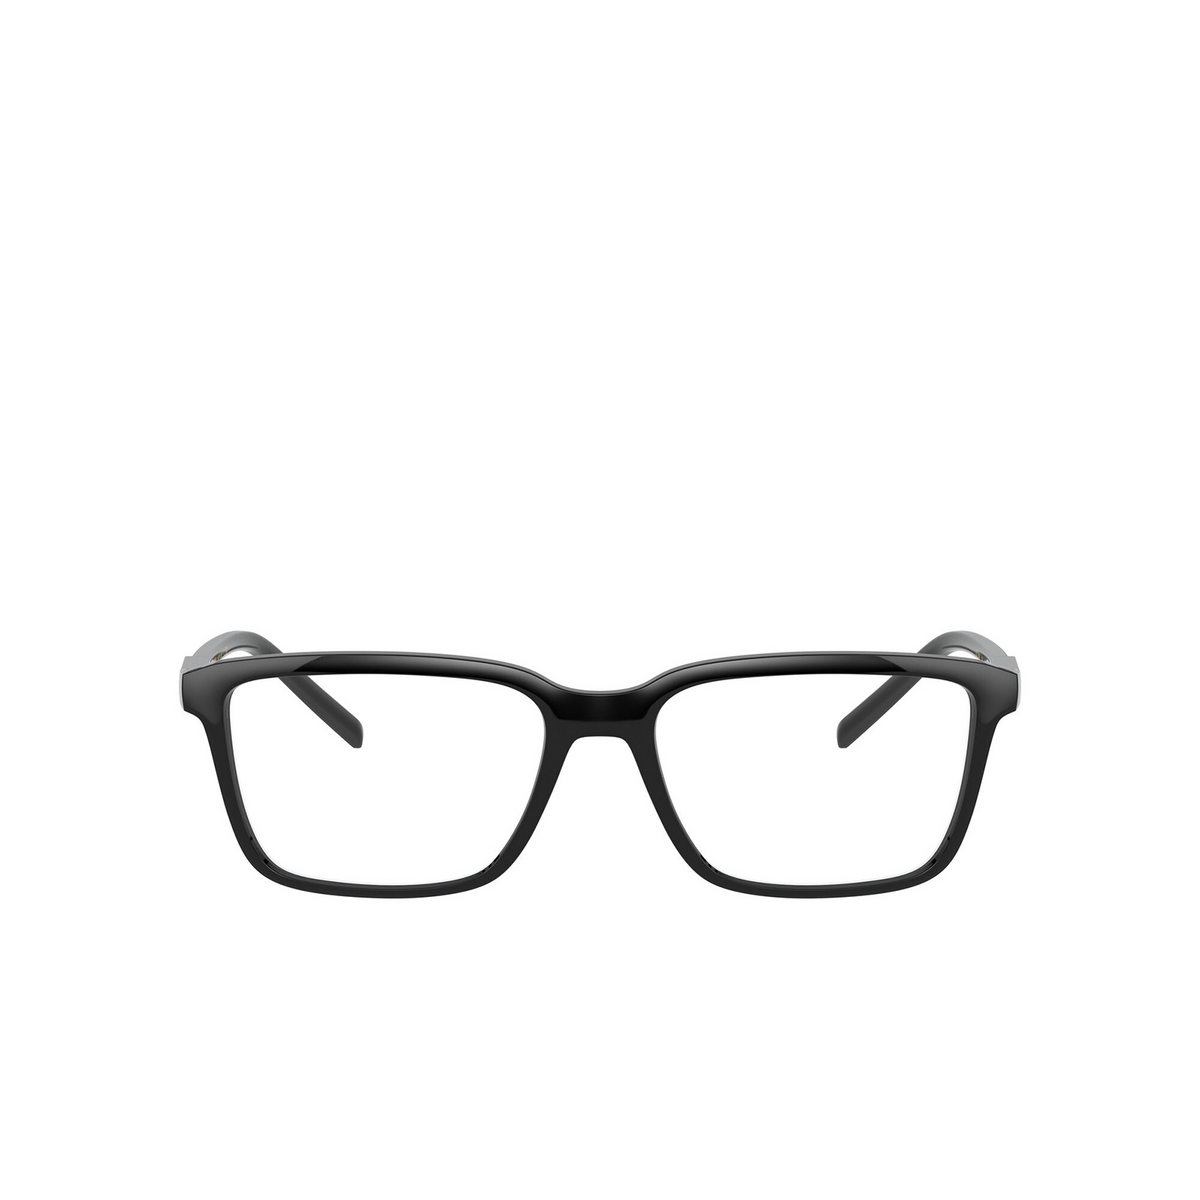 Dolce & Gabbana® Rectangle Eyeglasses: DG5061 color Black 501 - front view.